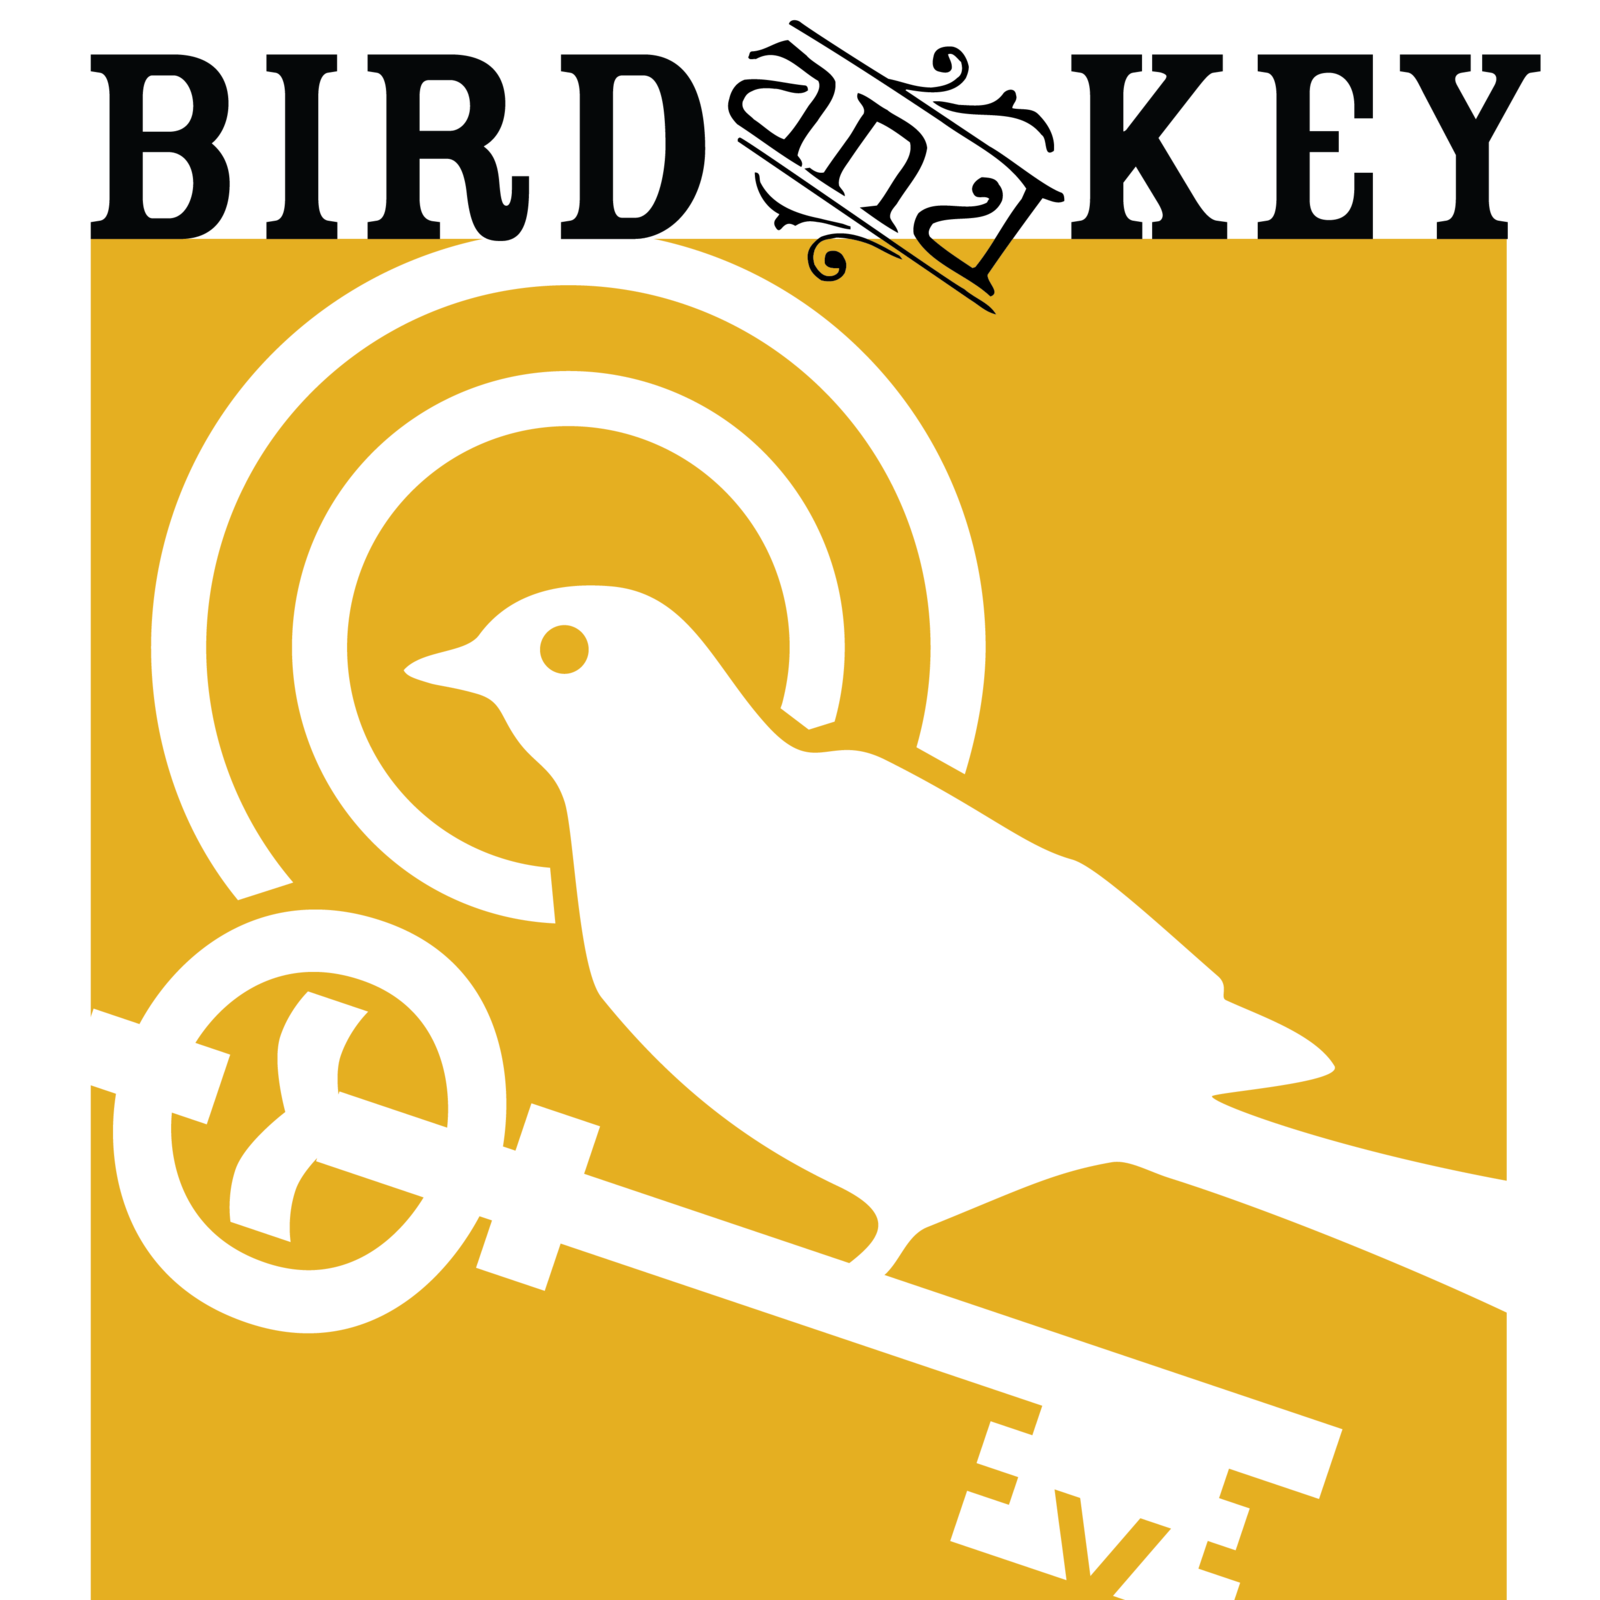 Bird and Key